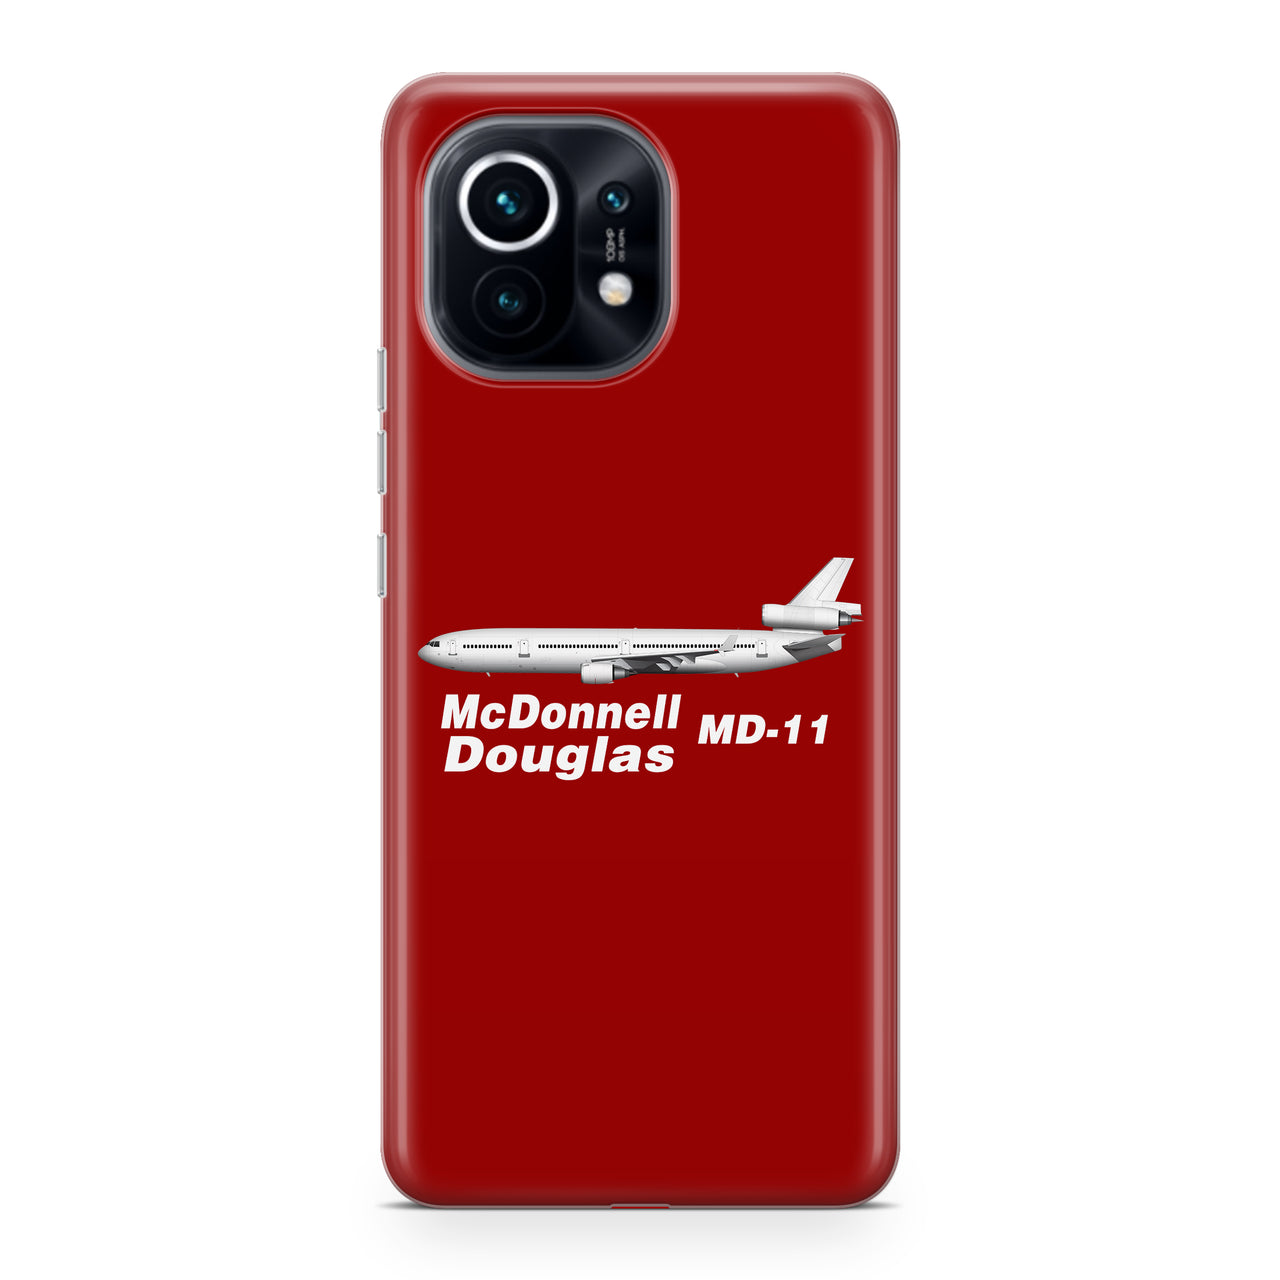 The McDonnell Douglas MD-11 Designed Xiaomi Cases